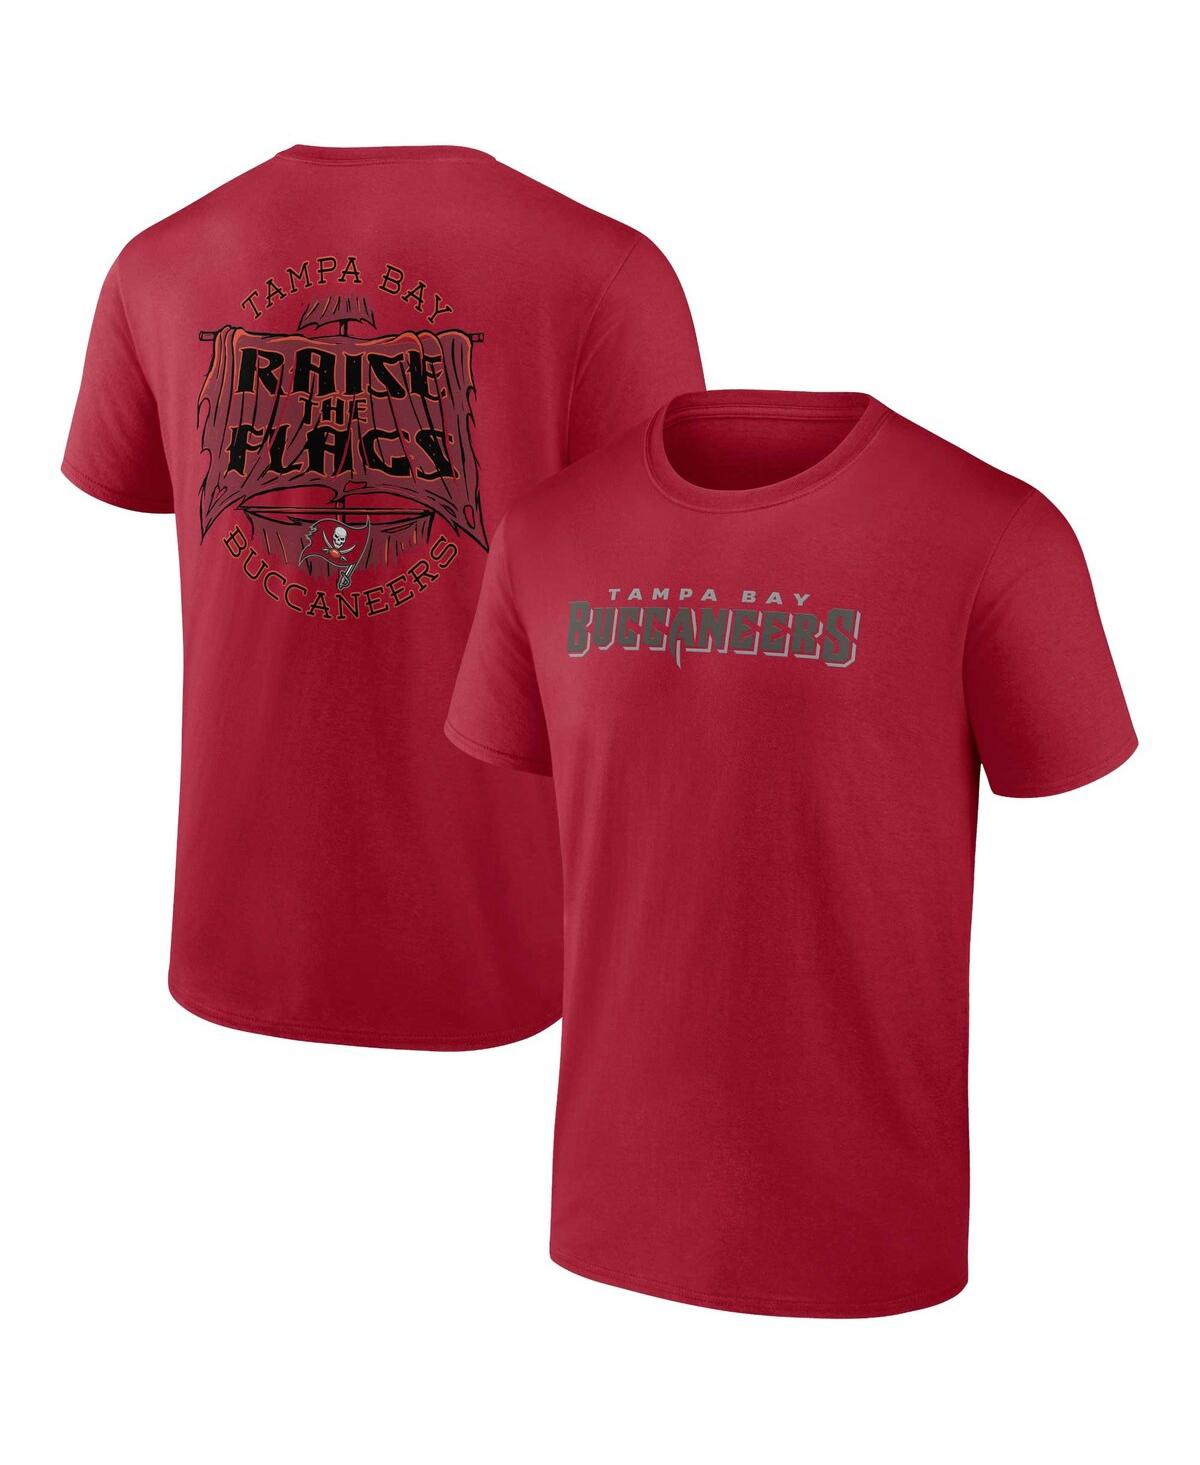 Shop Fanatics Men's  Red Tampa Bay Buccaneers Home Field Advantage T-shirt